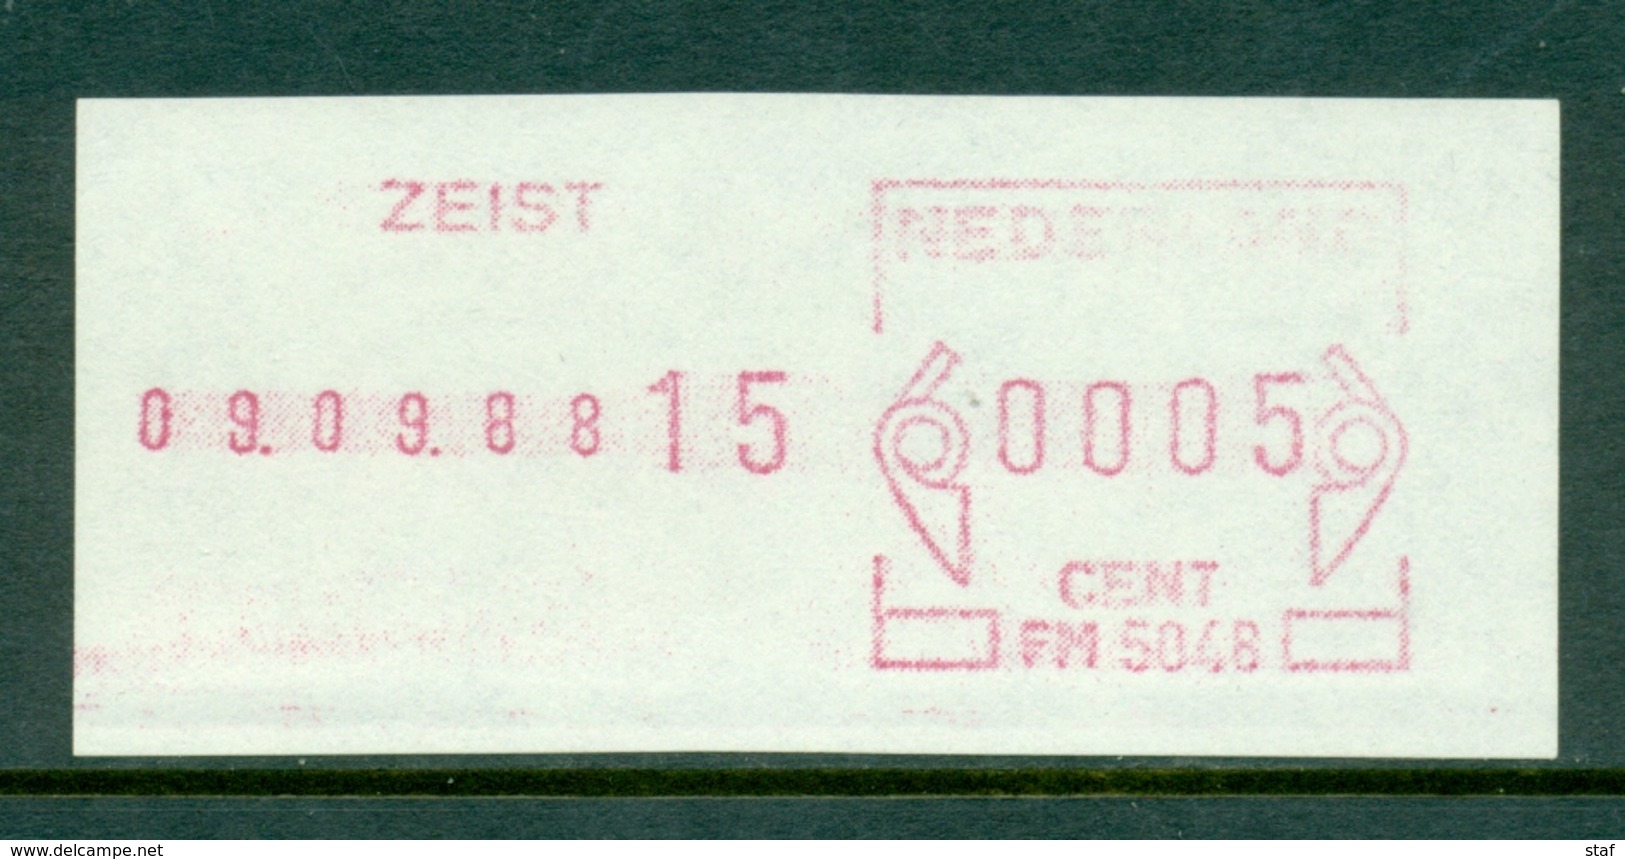 Loketstrook Zeist 1988 Postfris - Machines à Affranchir (EMA)